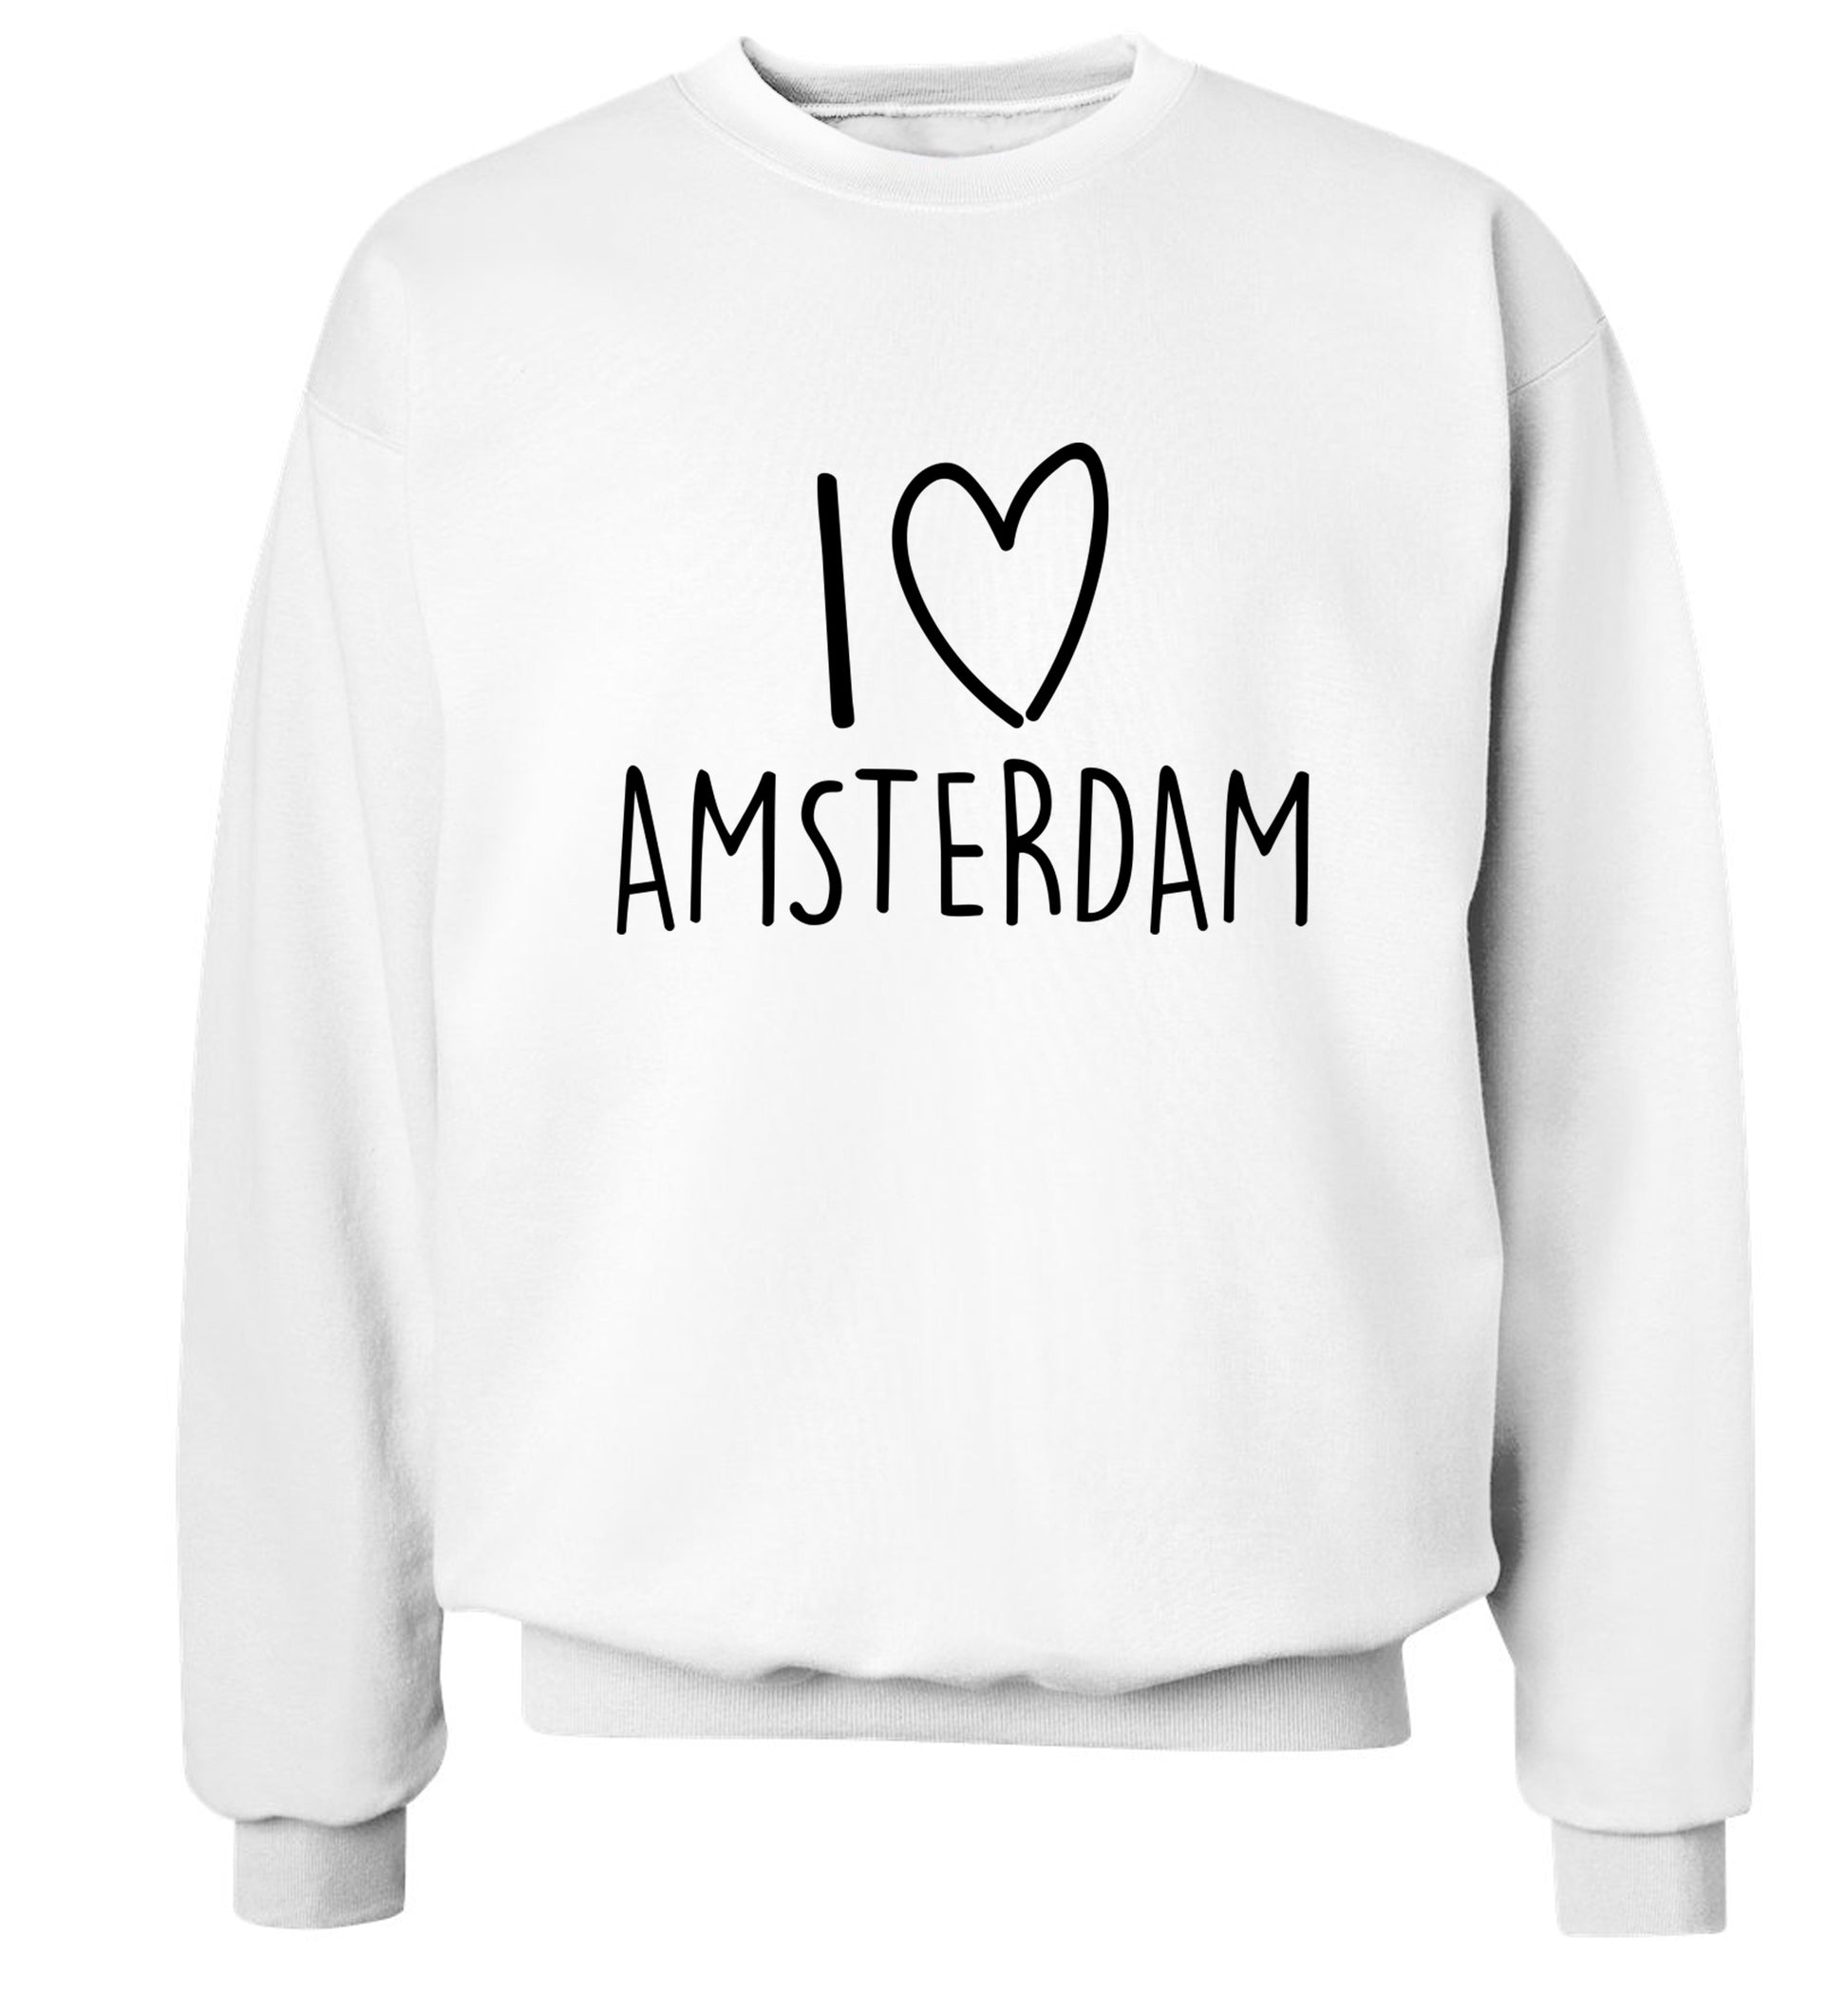 I love Amsterdam Adult's unisex white Sweater 2XL